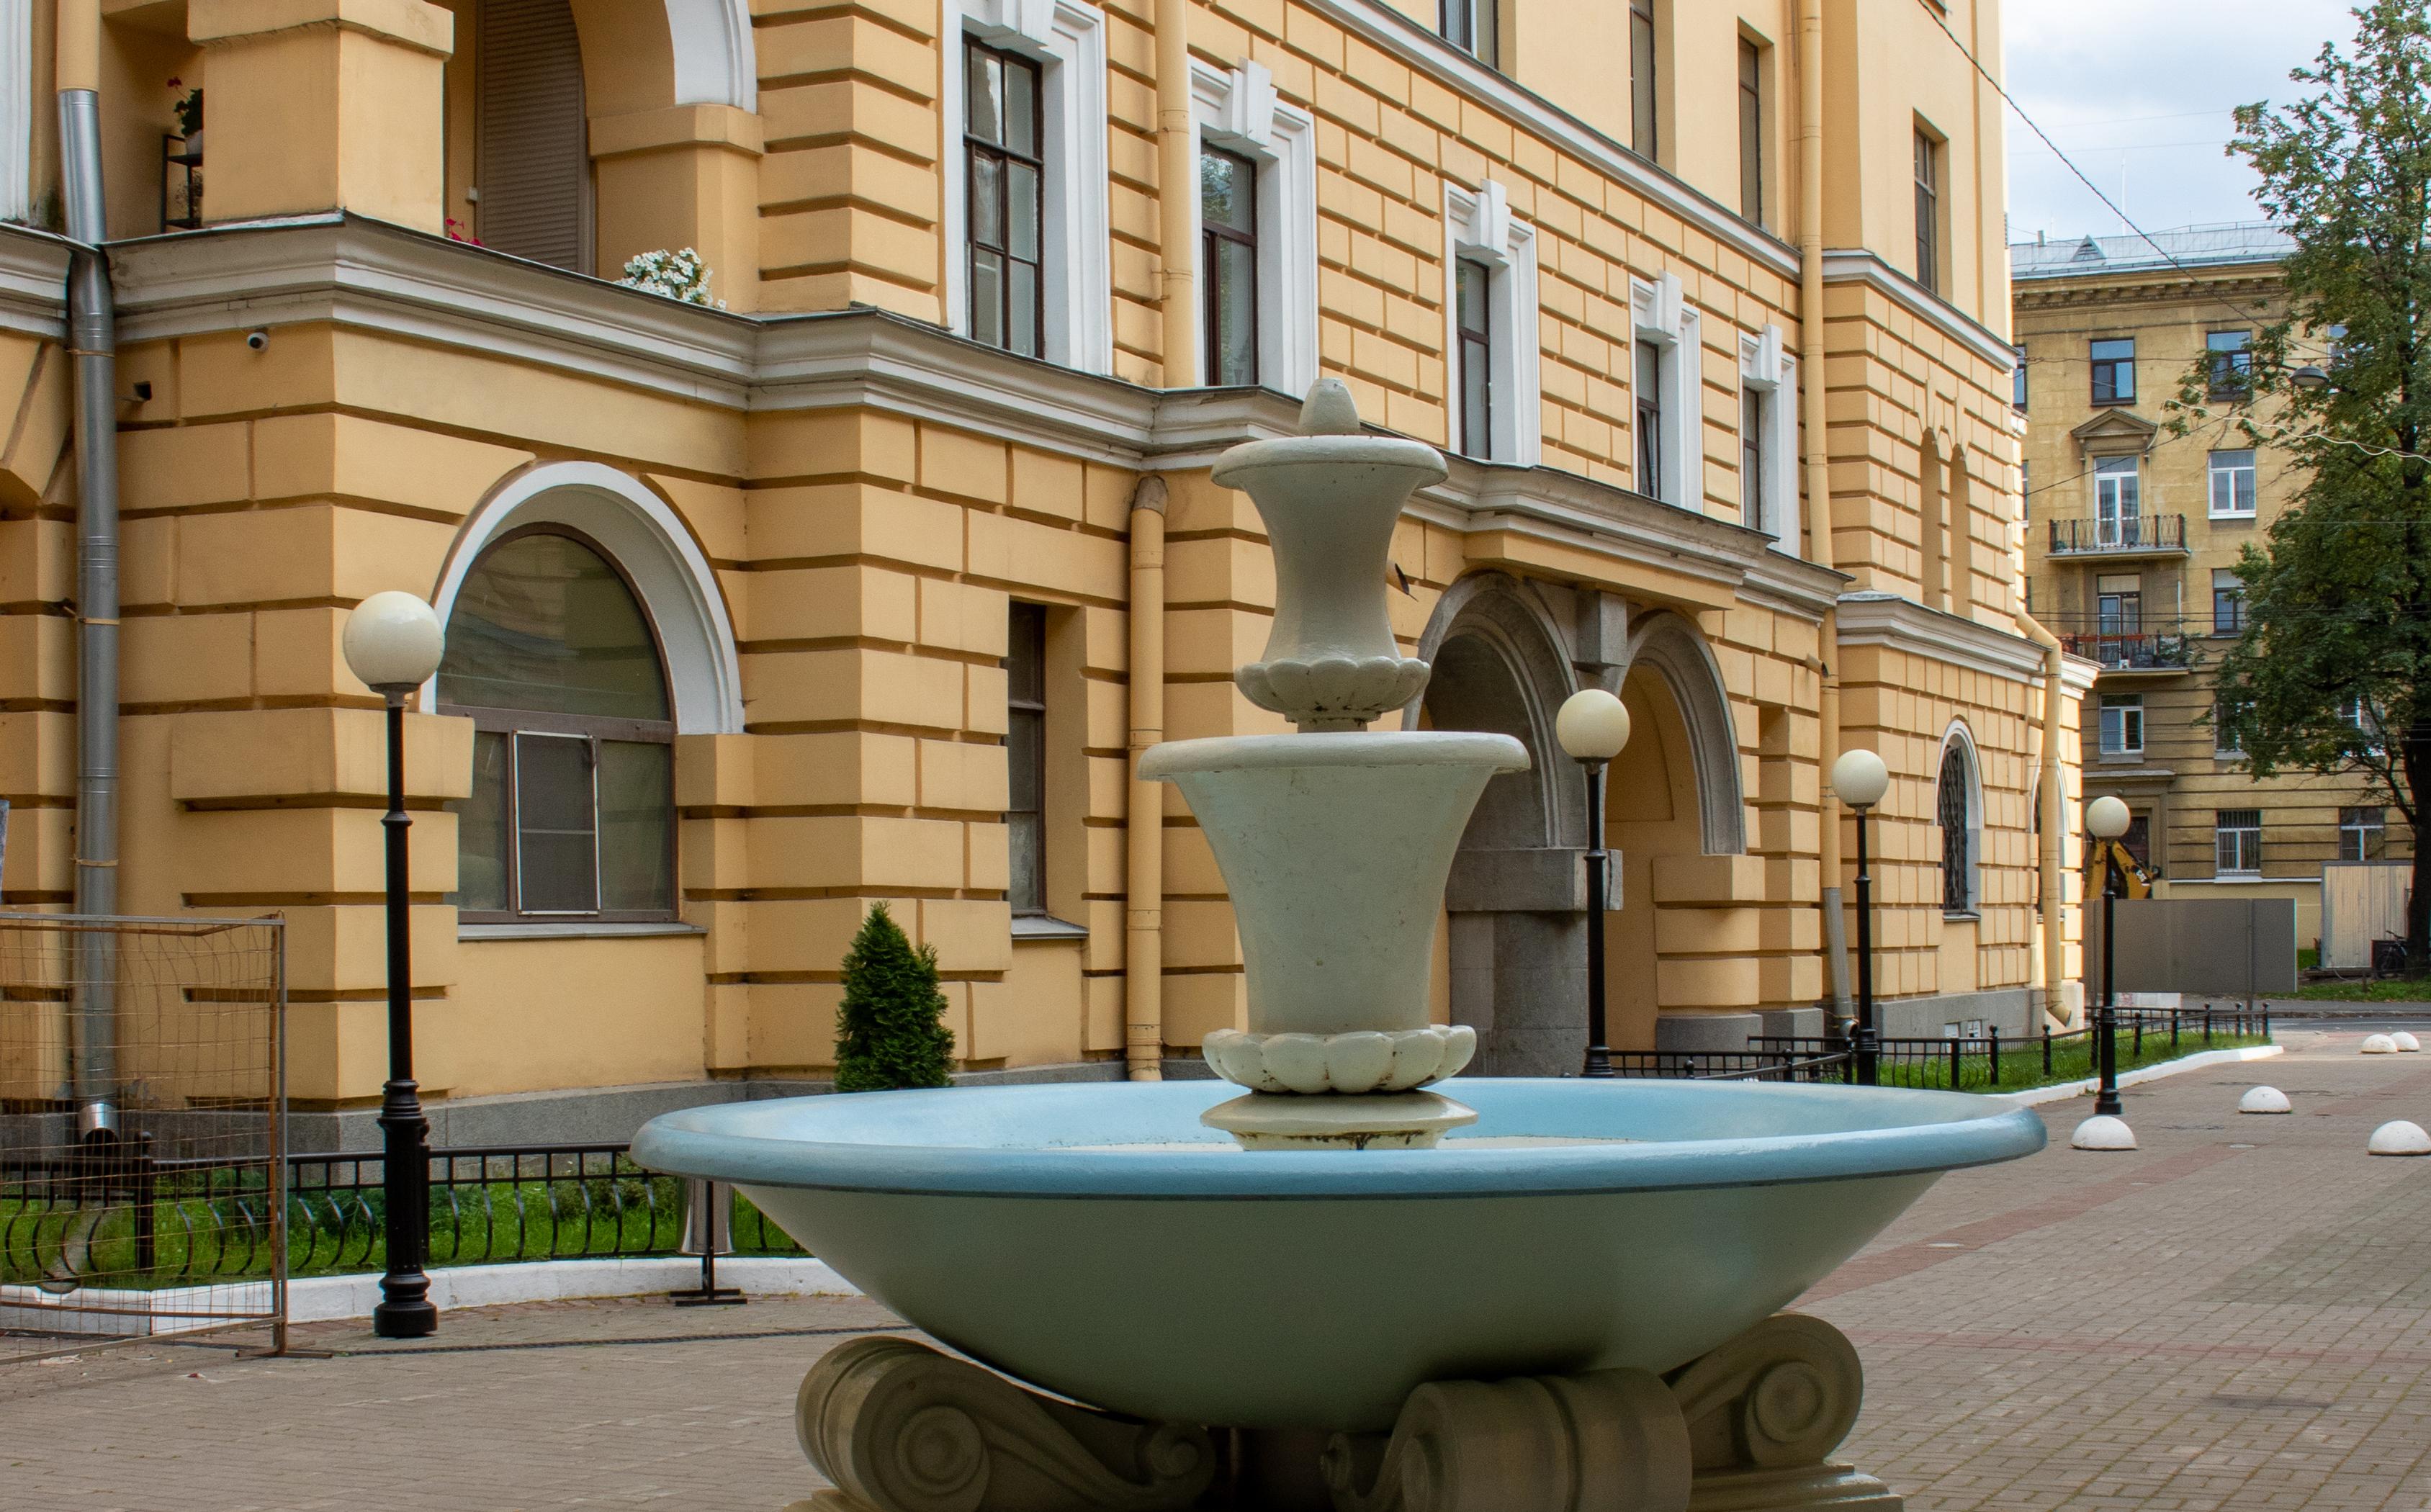 The Vyborgsky Palace of Culture